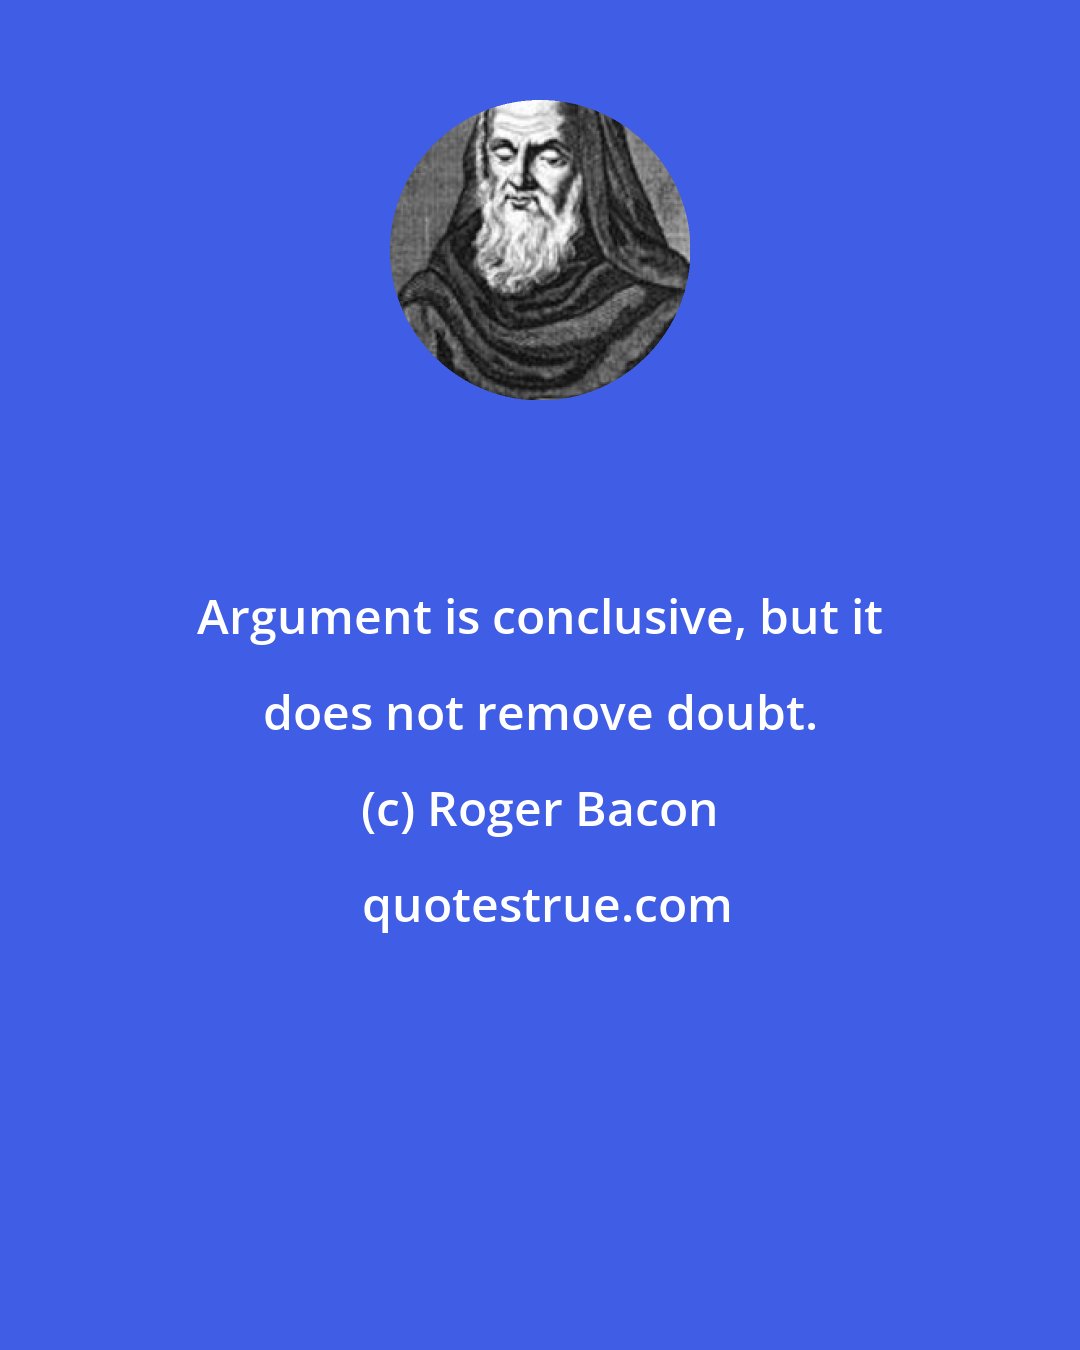 Roger Bacon: Argument is conclusive, but it does not remove doubt.